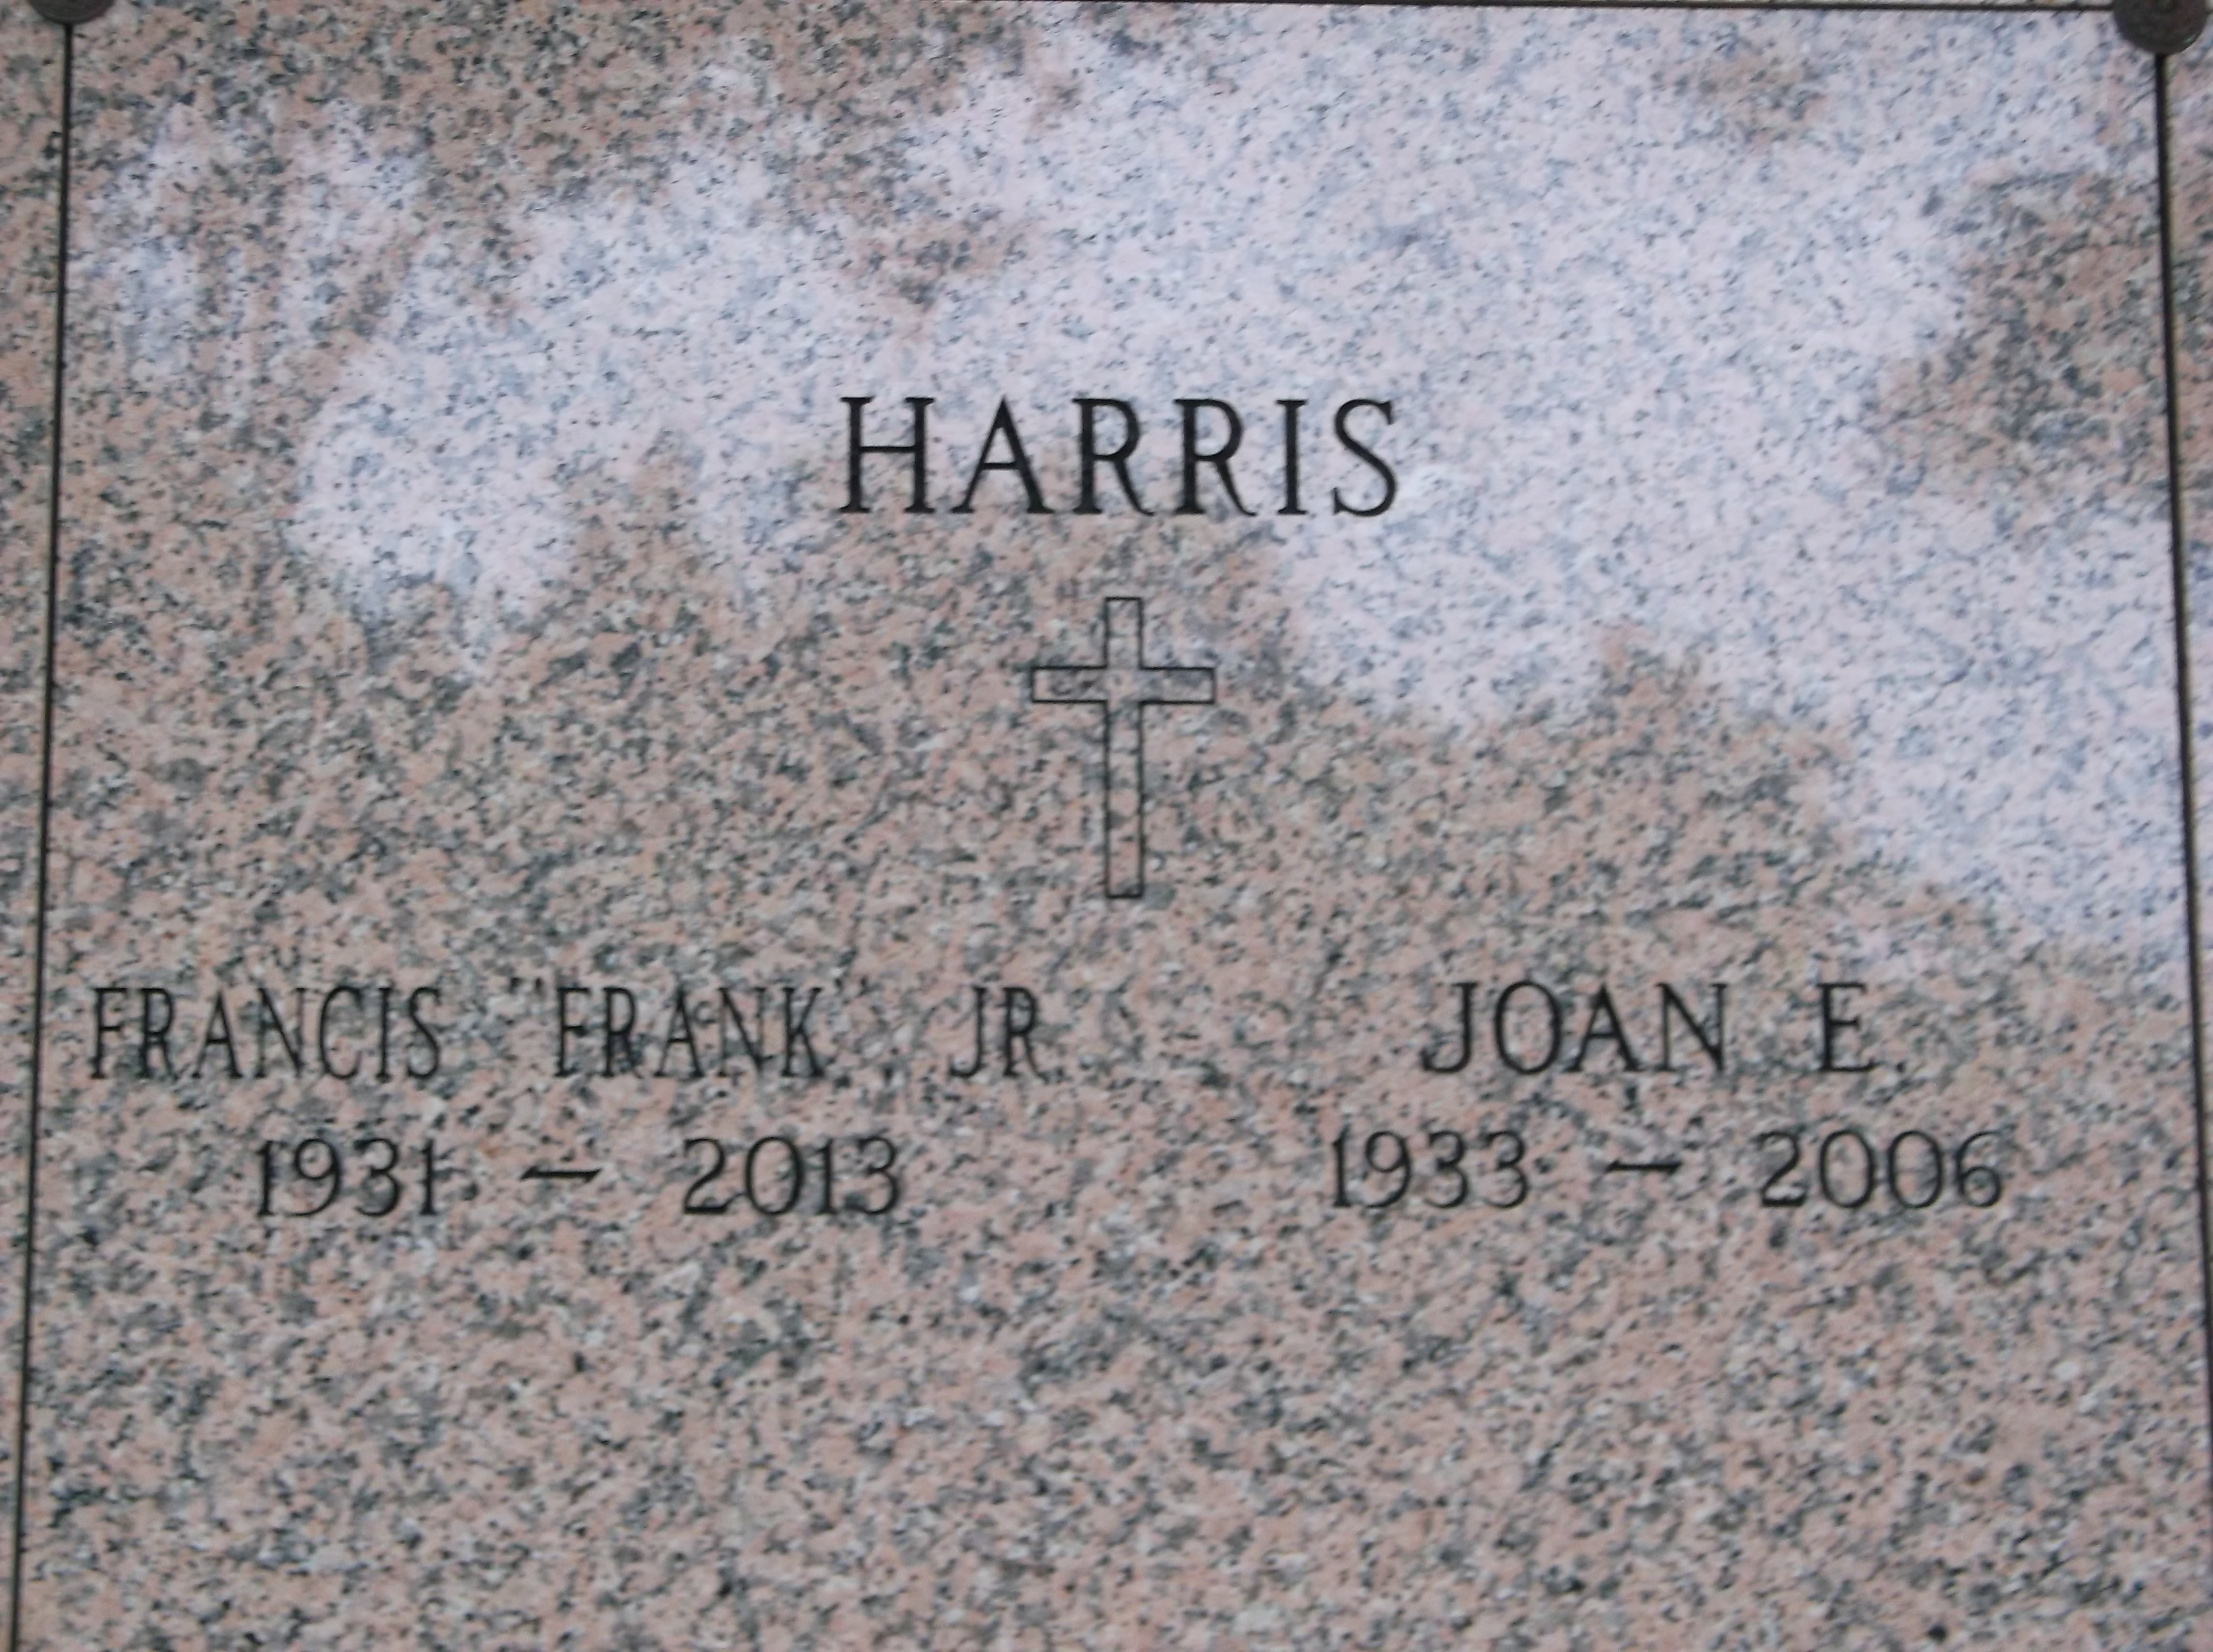 Francis "Frank" Harris, Jr